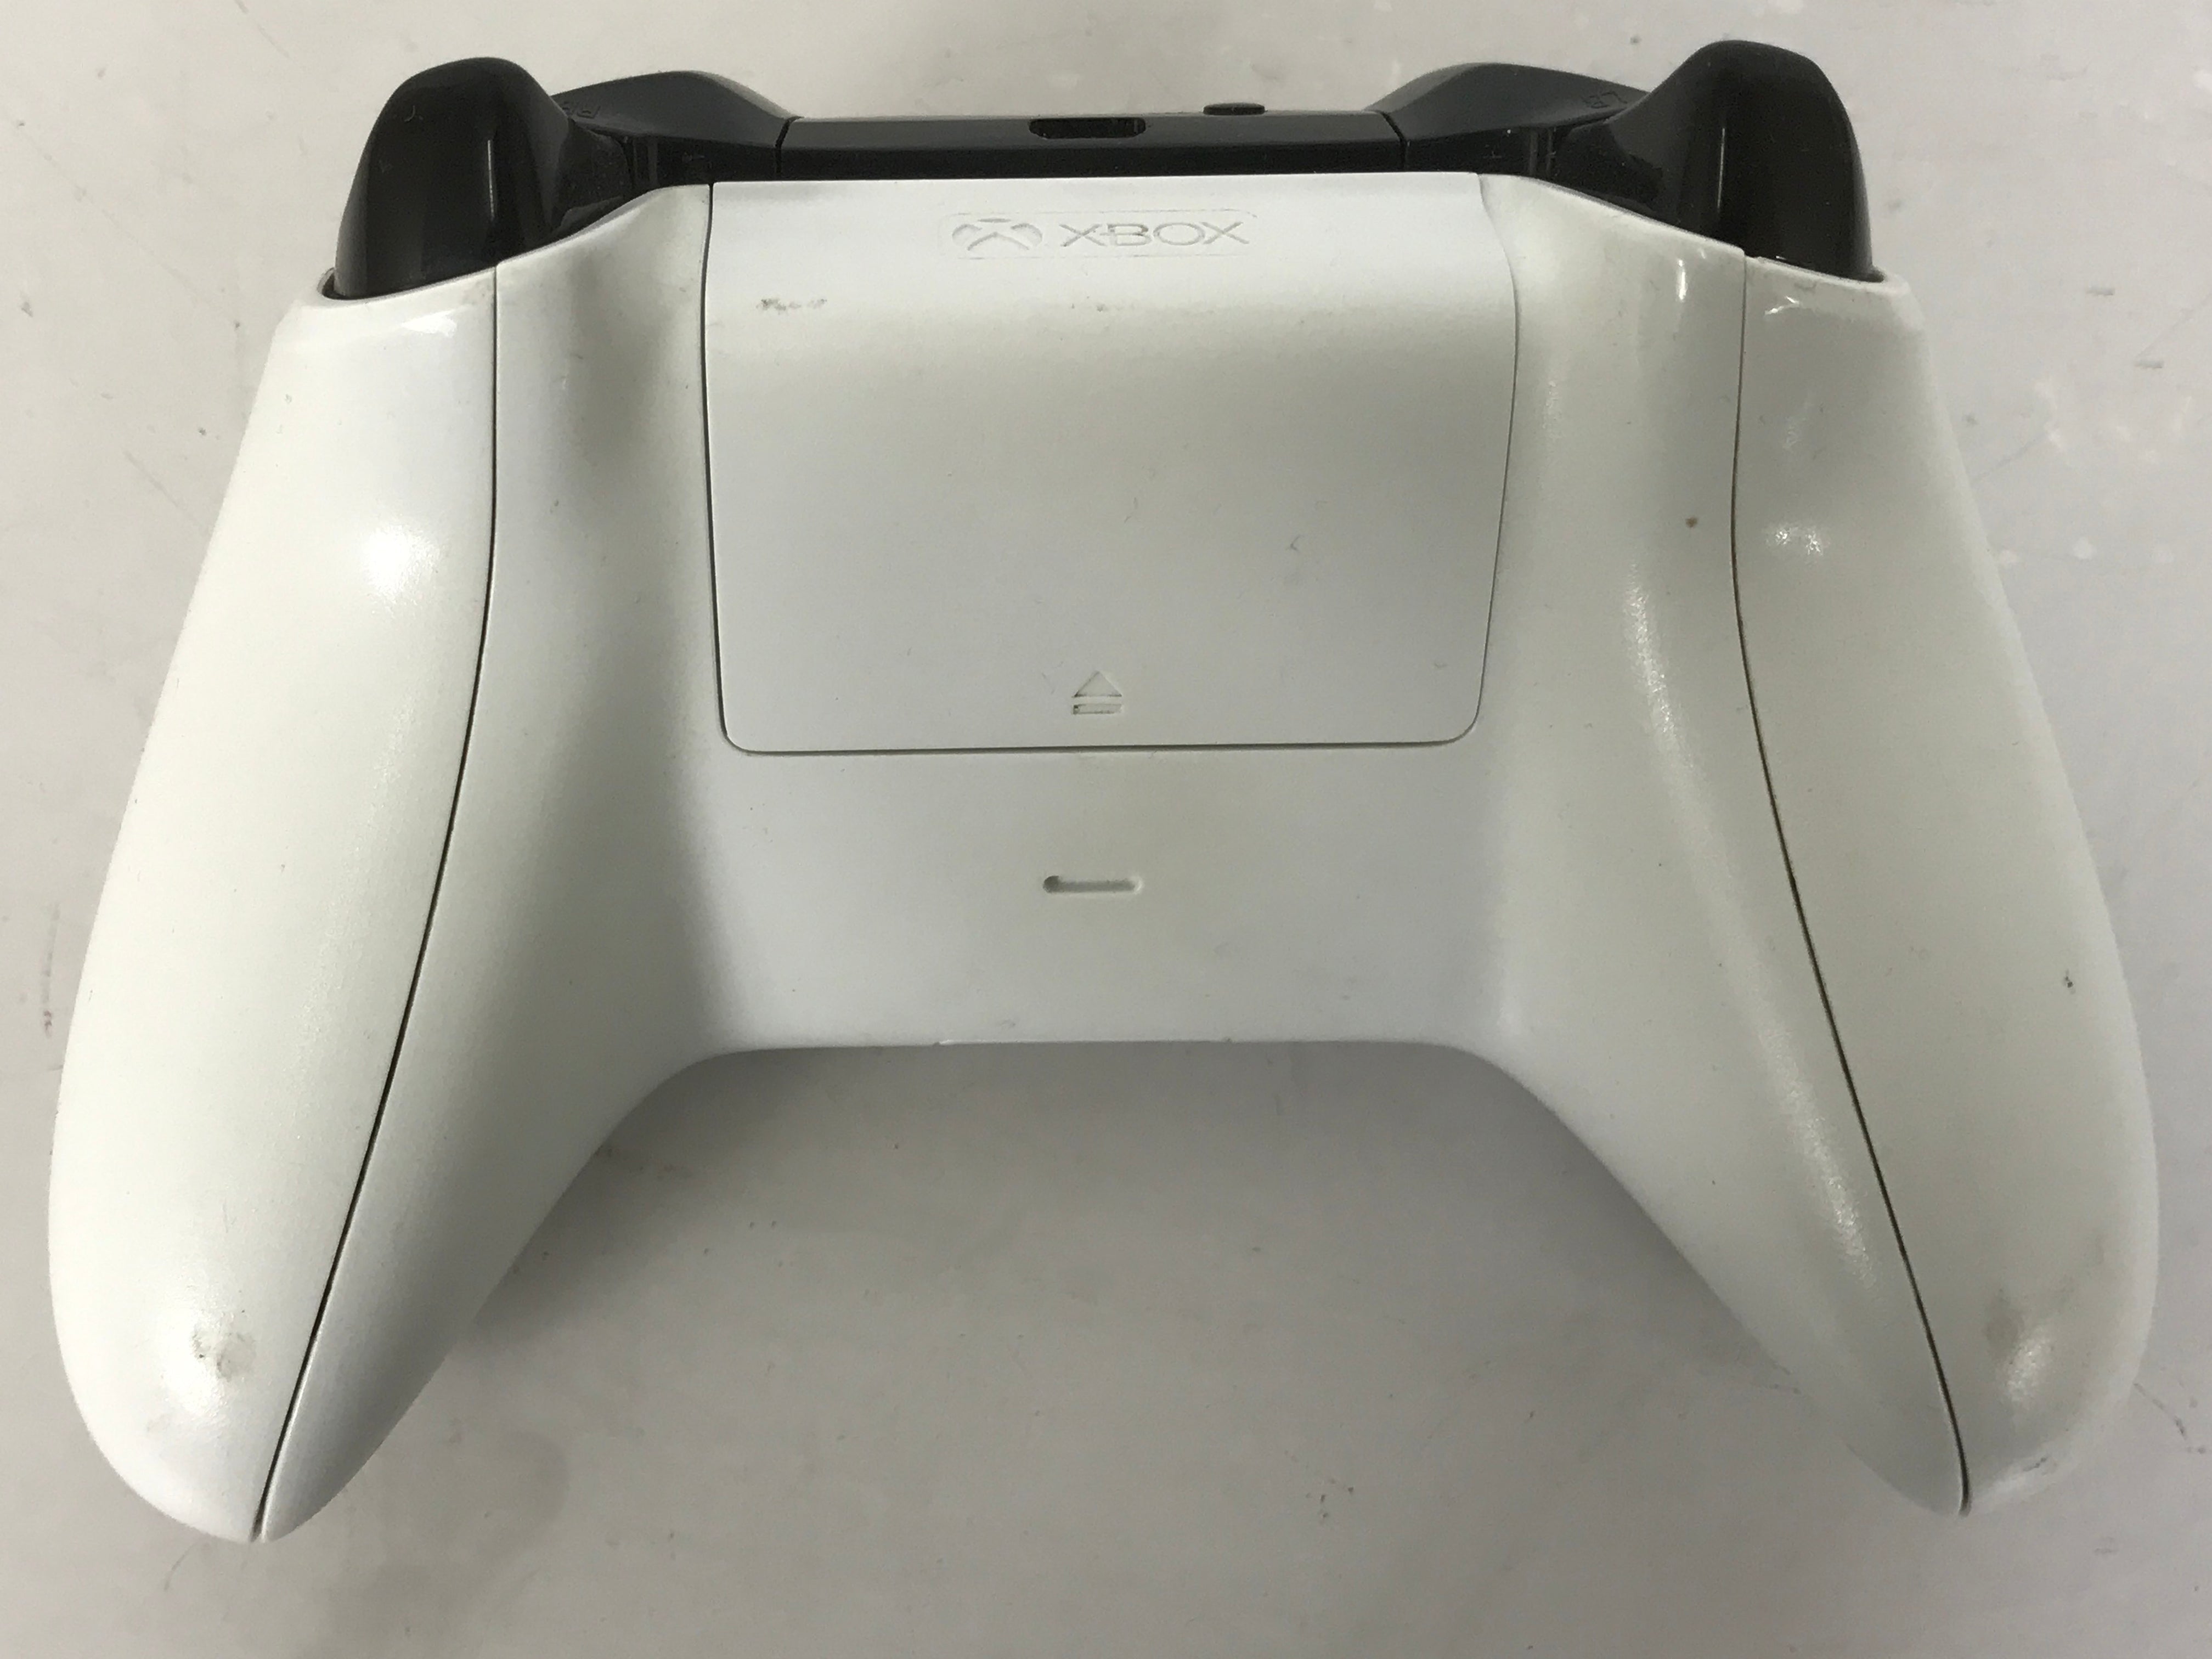 Microsoft Xbox One White Wireless Game Controller